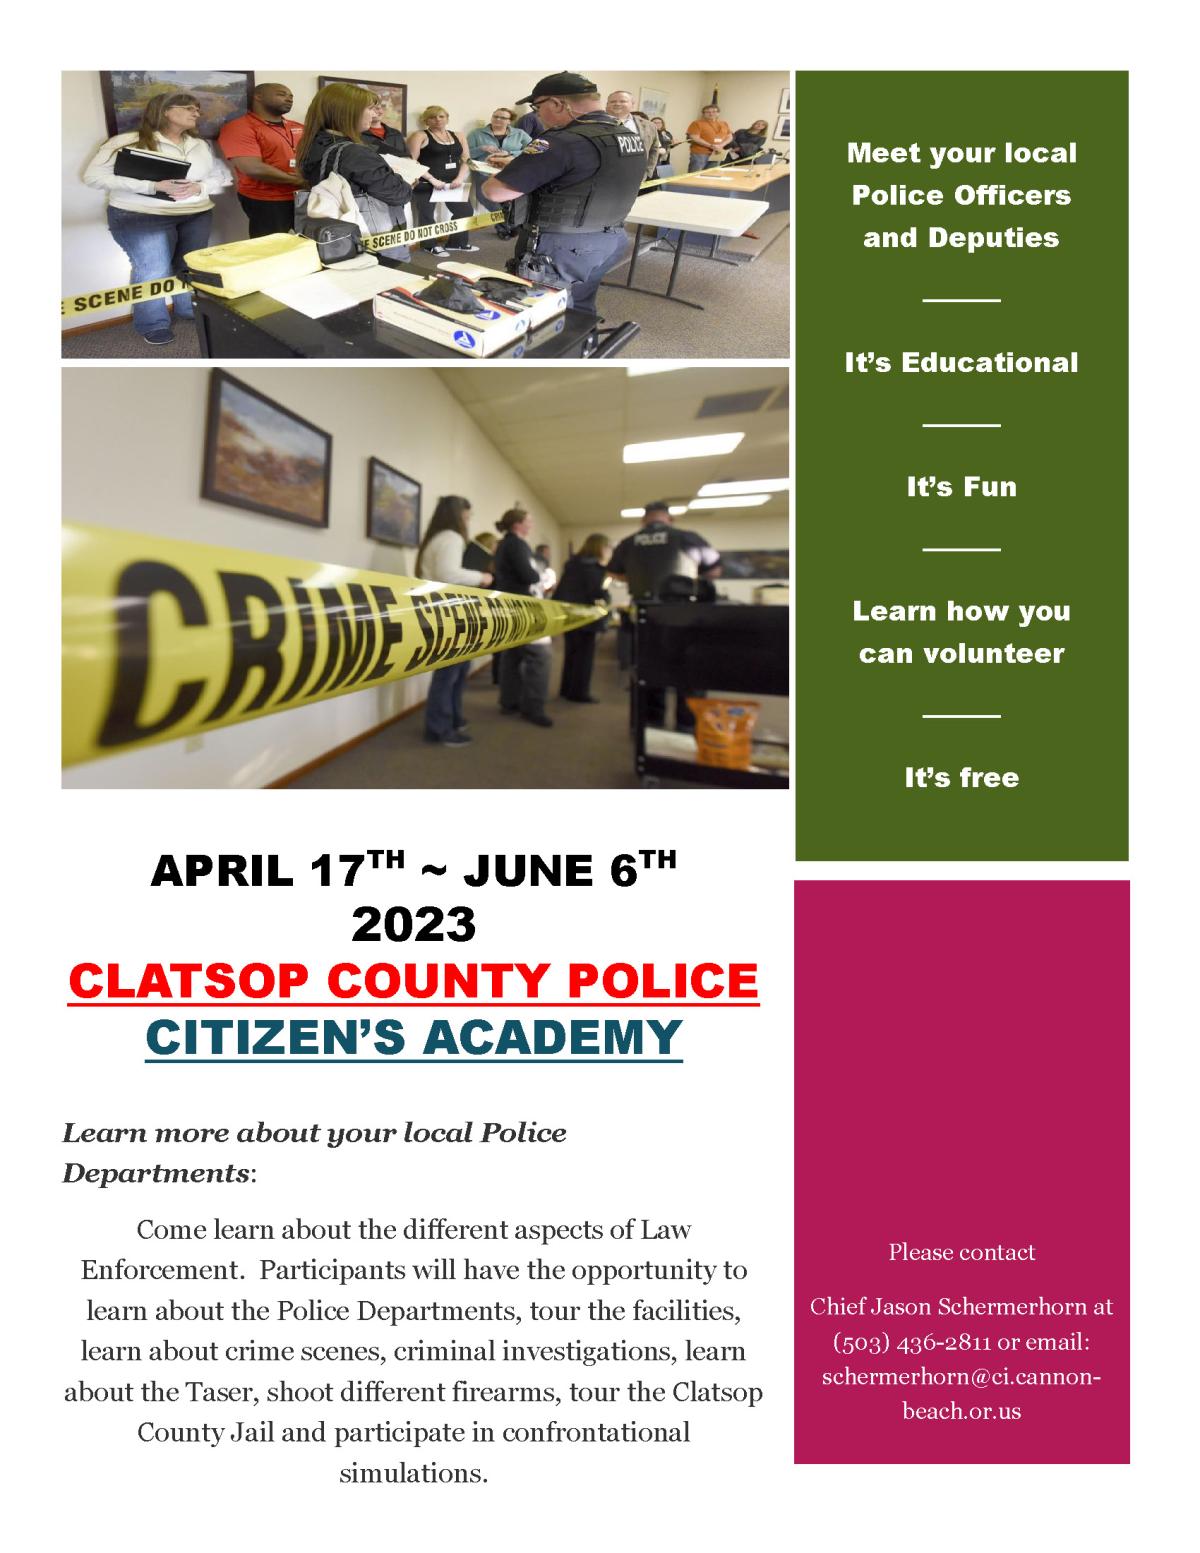 2023 Citizen's Academy flyer